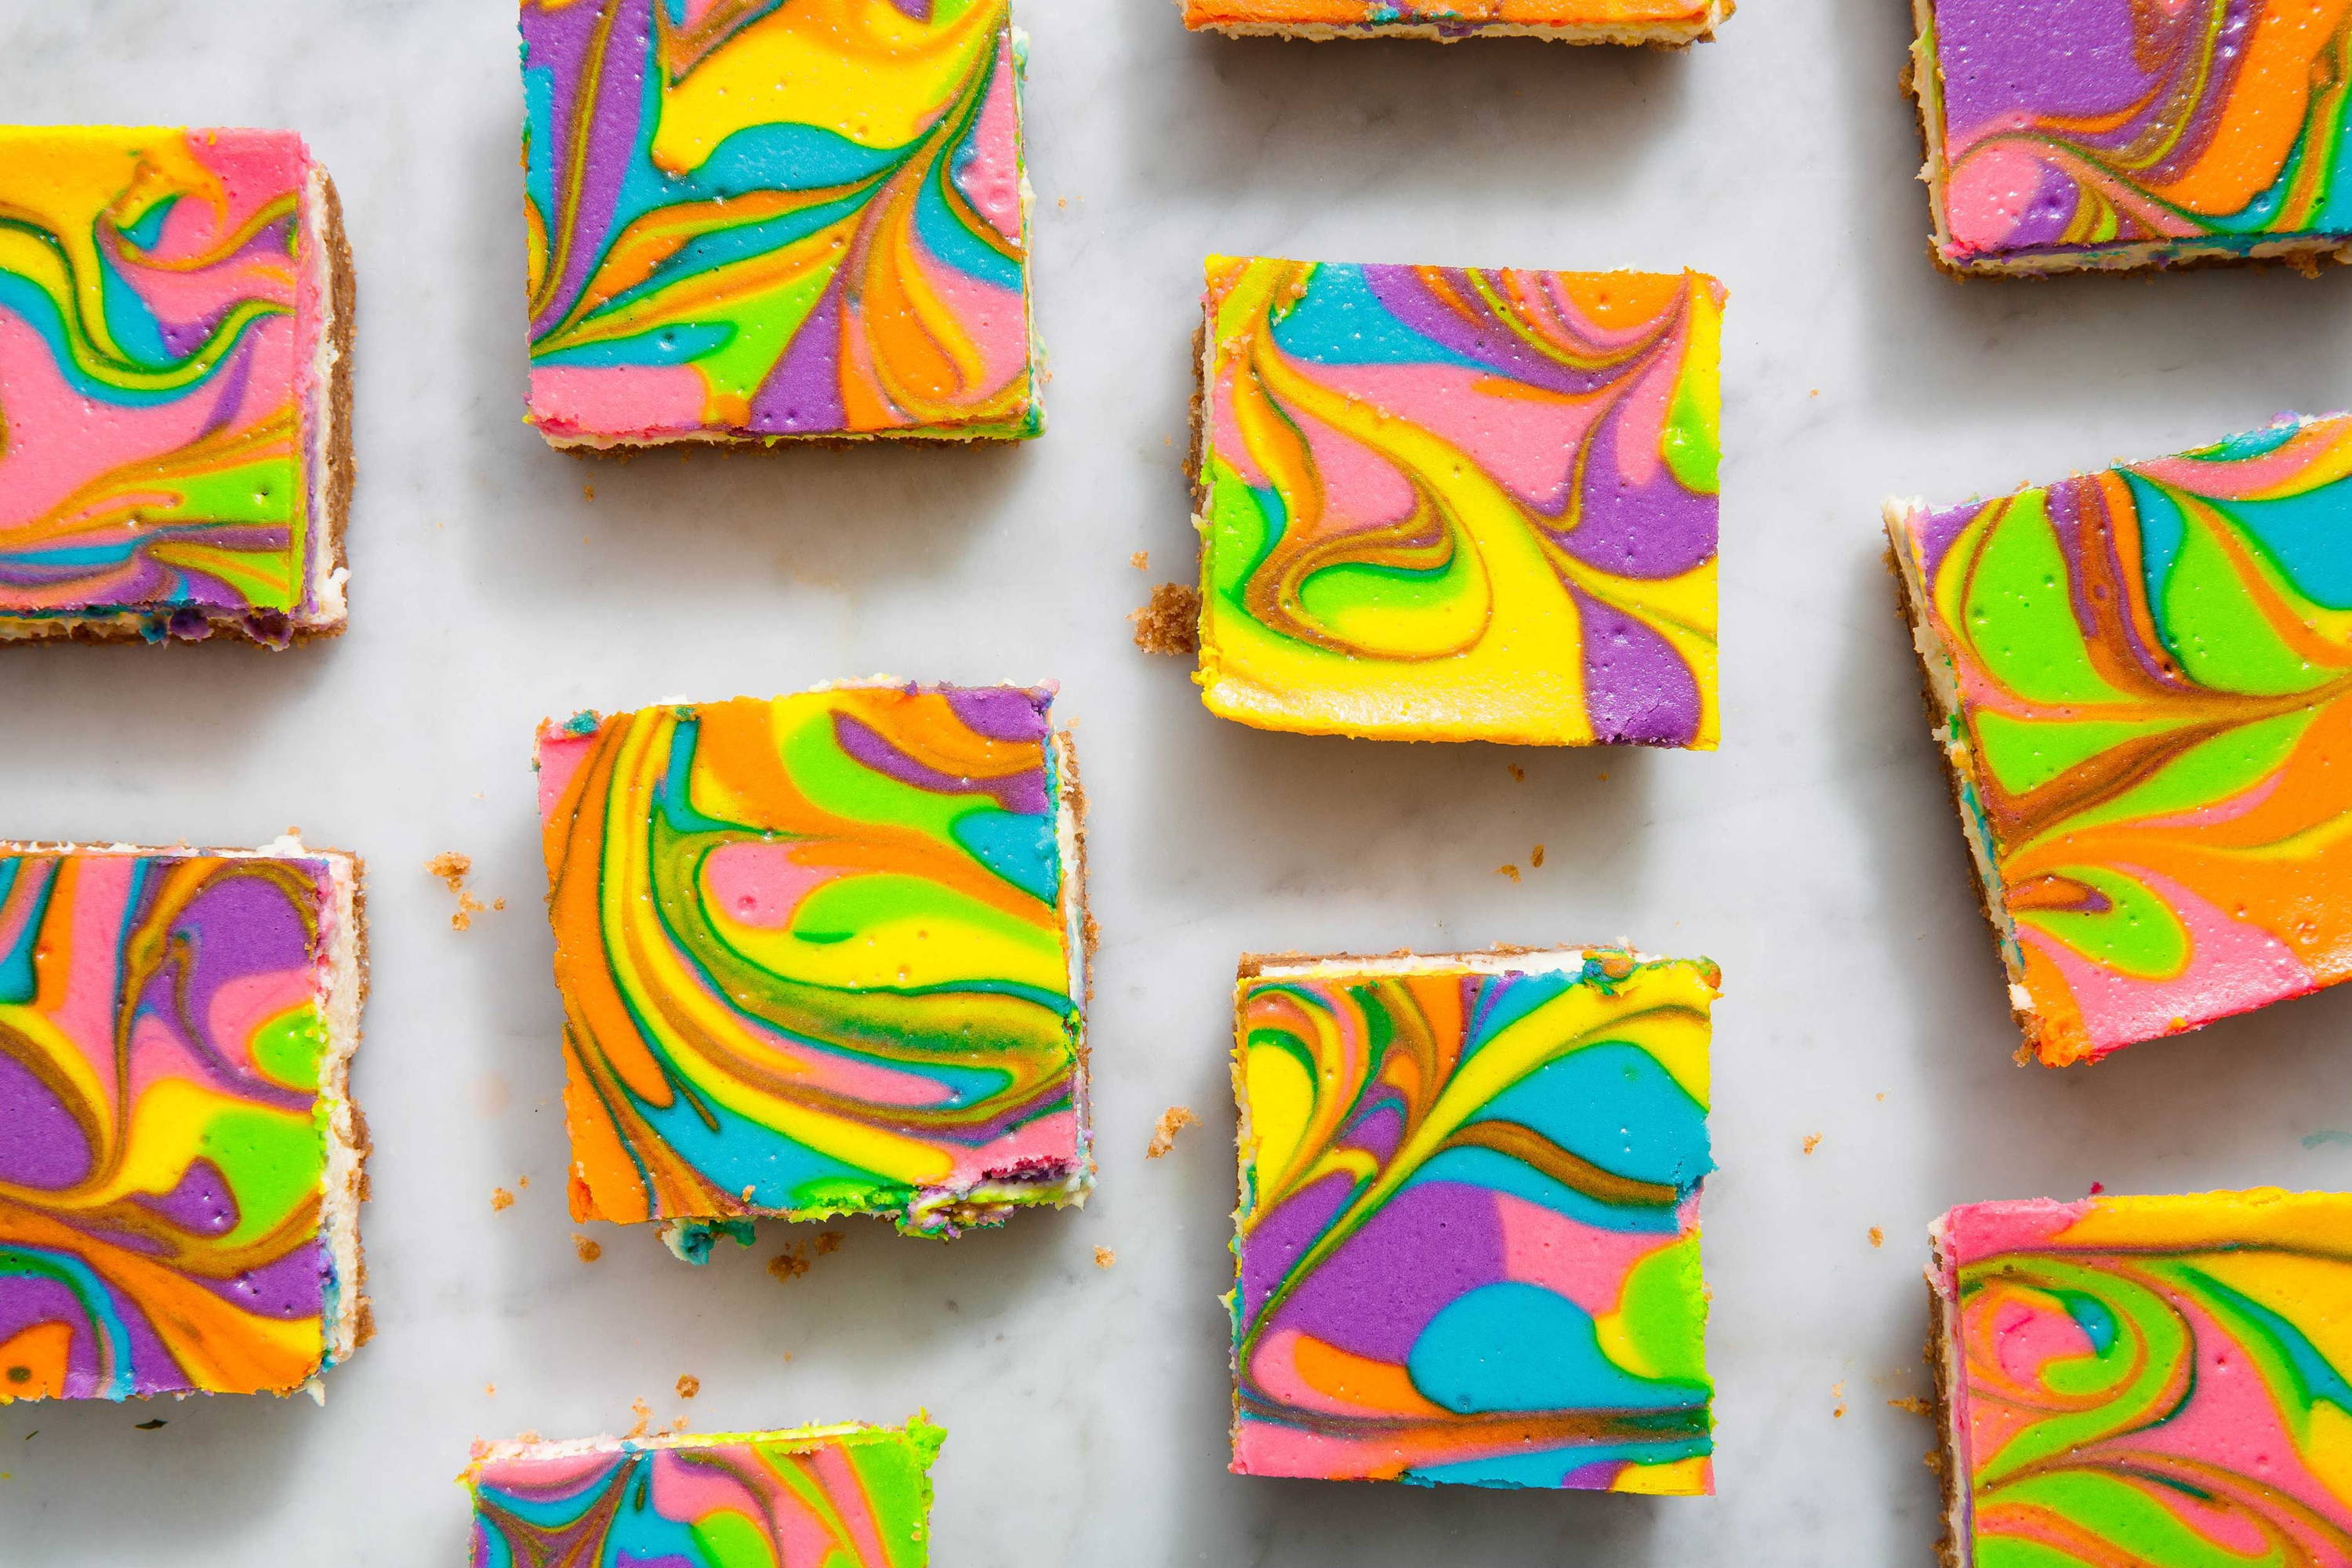 Image of colourful rainbow cheesecake bars.